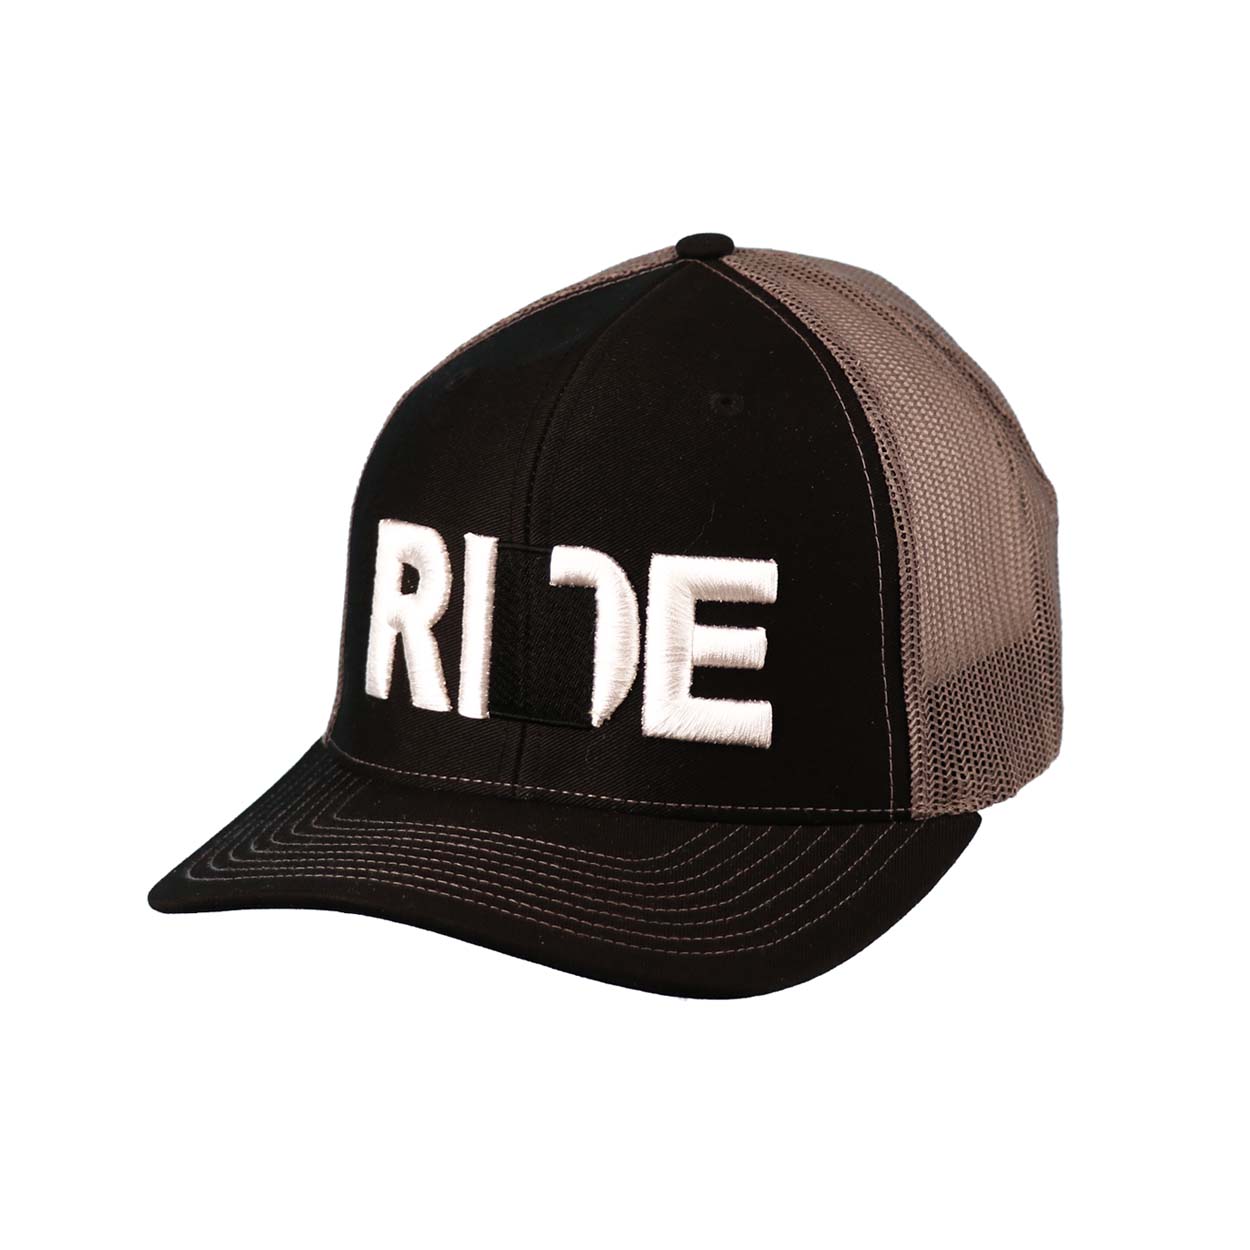 Ride Utah Classic Embroidered Snapback Trucker Hat Black/Gray